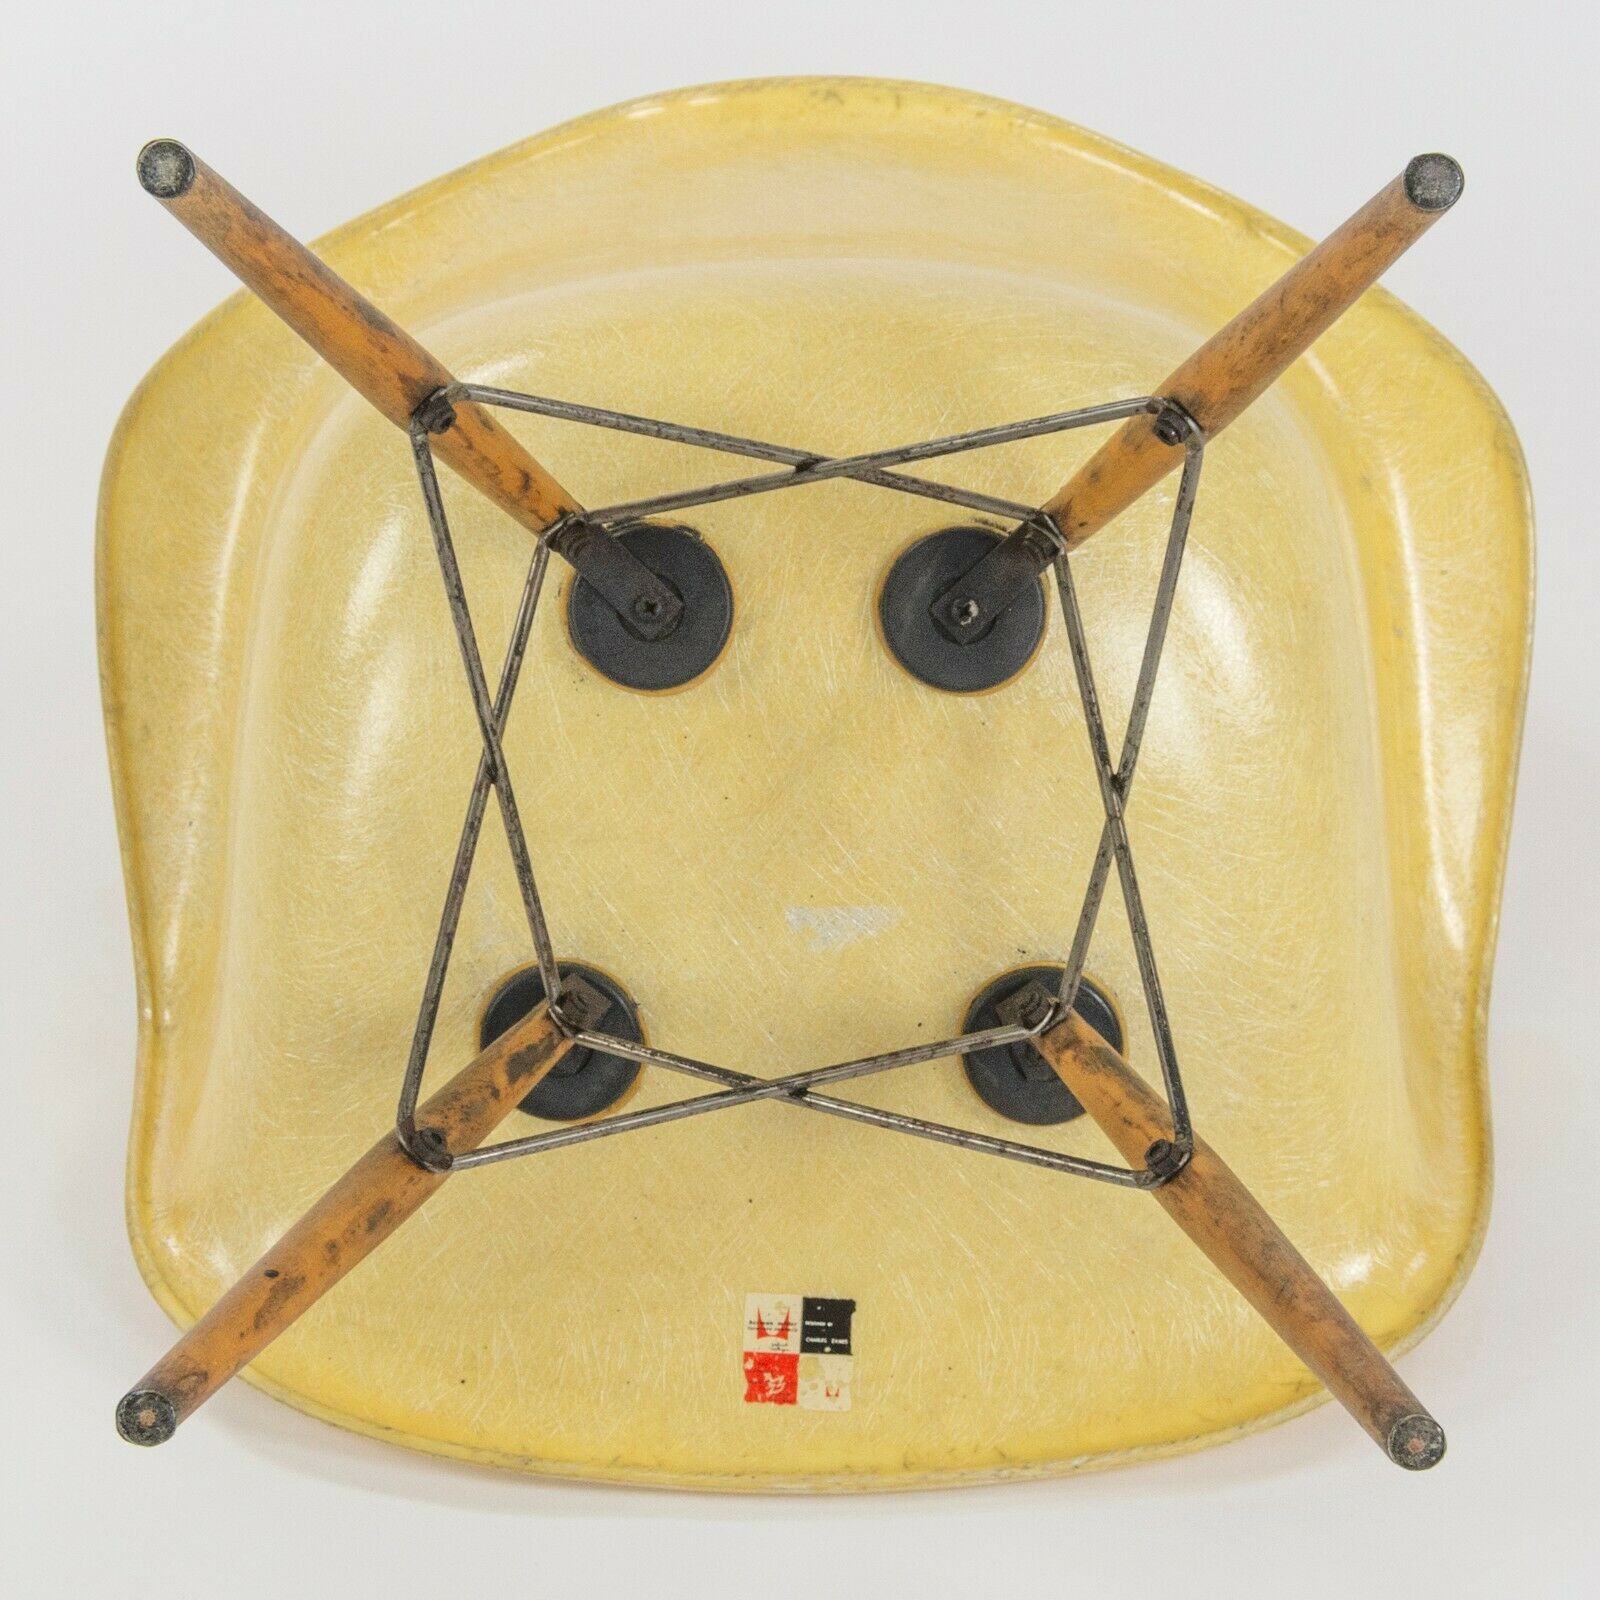 SOLD 1951 Herman Miller Eames Zenith DAW Lemon Yellow Arm Shell Chair w Dowel & Rope Edge